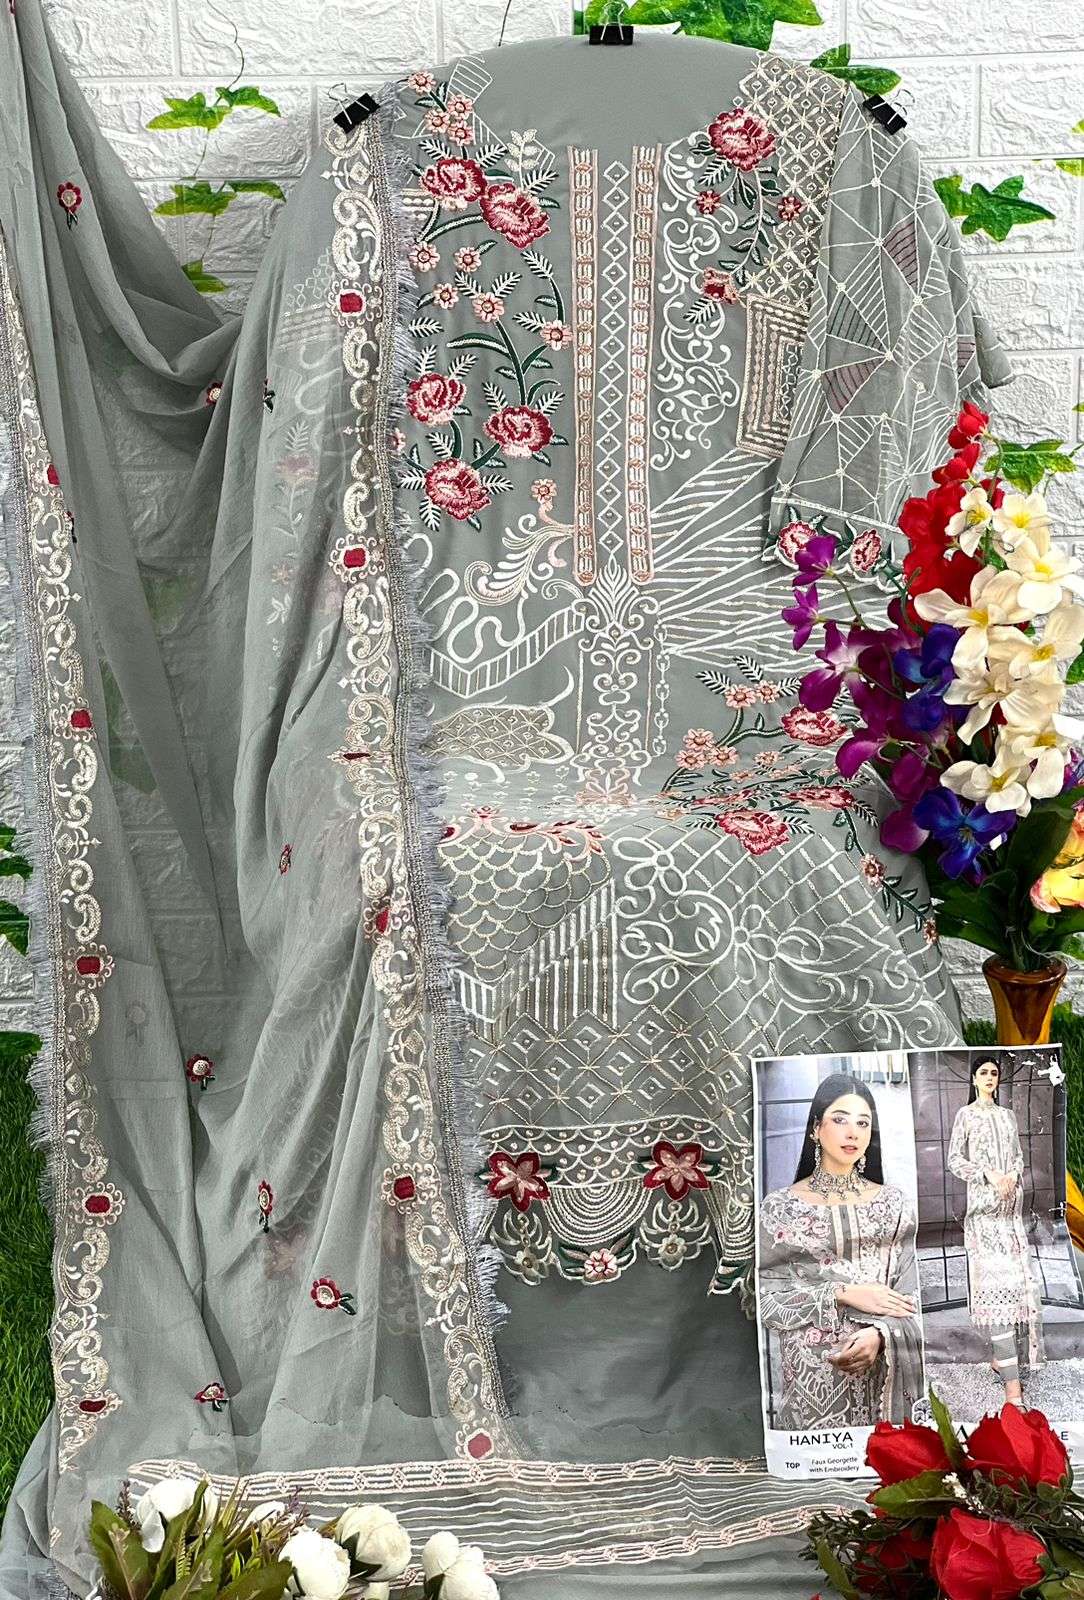 zaha hinaya vol-1 10128 series georgette designer pakistani salwar suits catalogue wholesale price surat